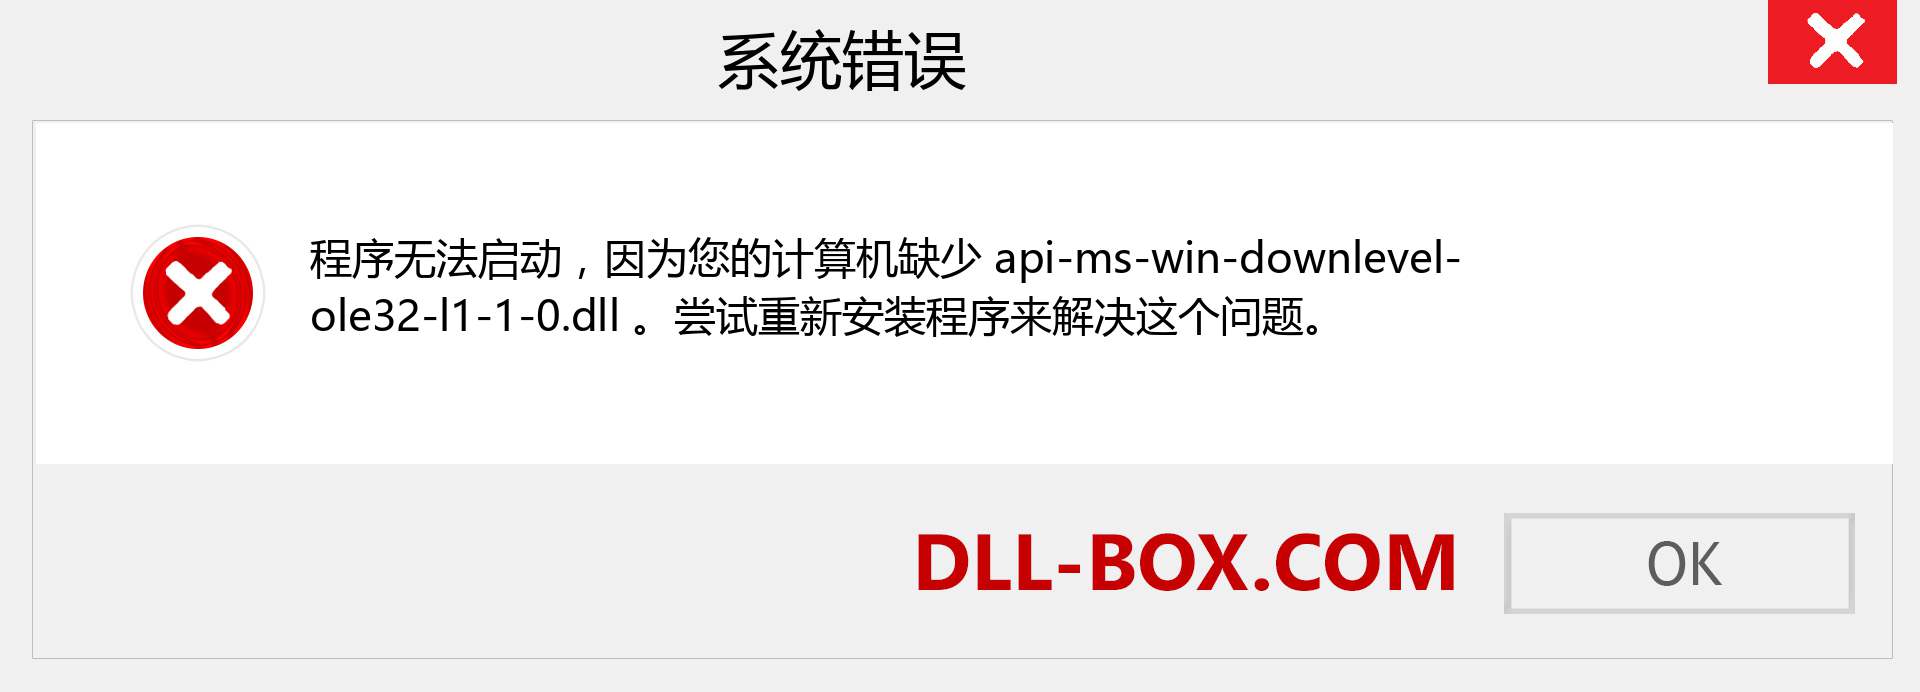 api-ms-win-downlevel-ole32-l1-1-0.dll 文件丢失？。 适用于 Windows 7、8、10 的下载 - 修复 Windows、照片、图像上的 api-ms-win-downlevel-ole32-l1-1-0 dll 丢失错误